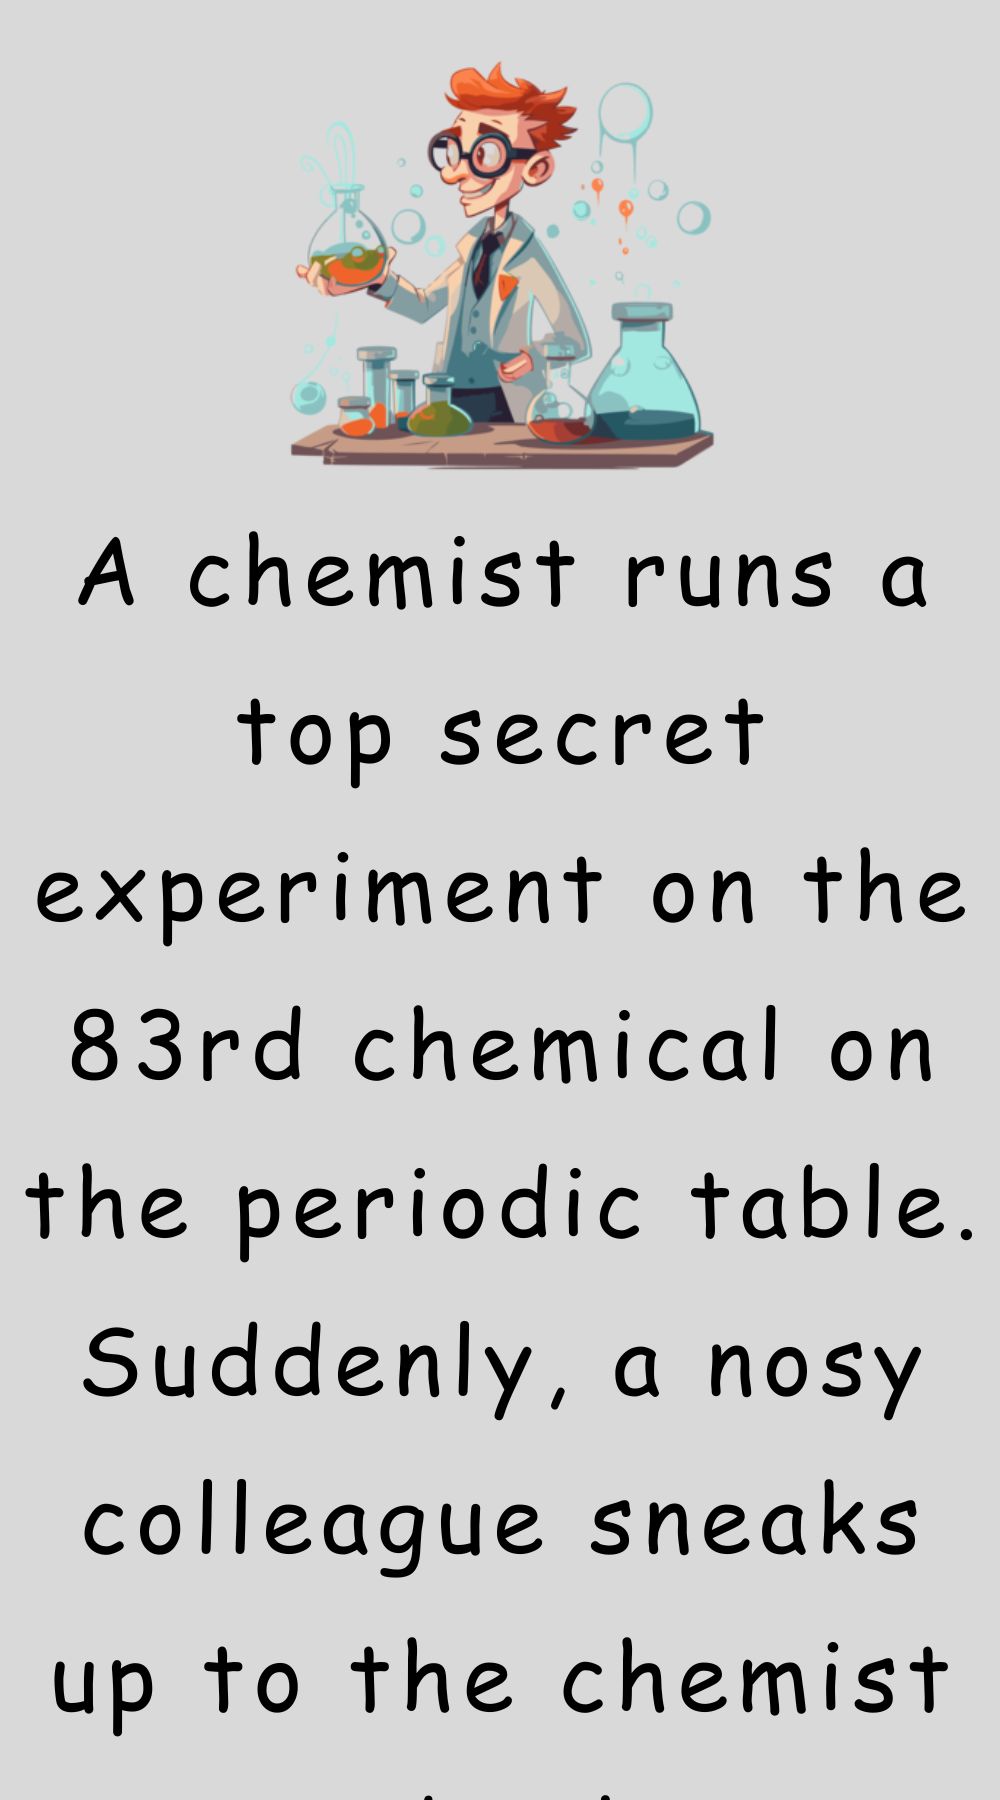 A chemist runs a top secret experiment